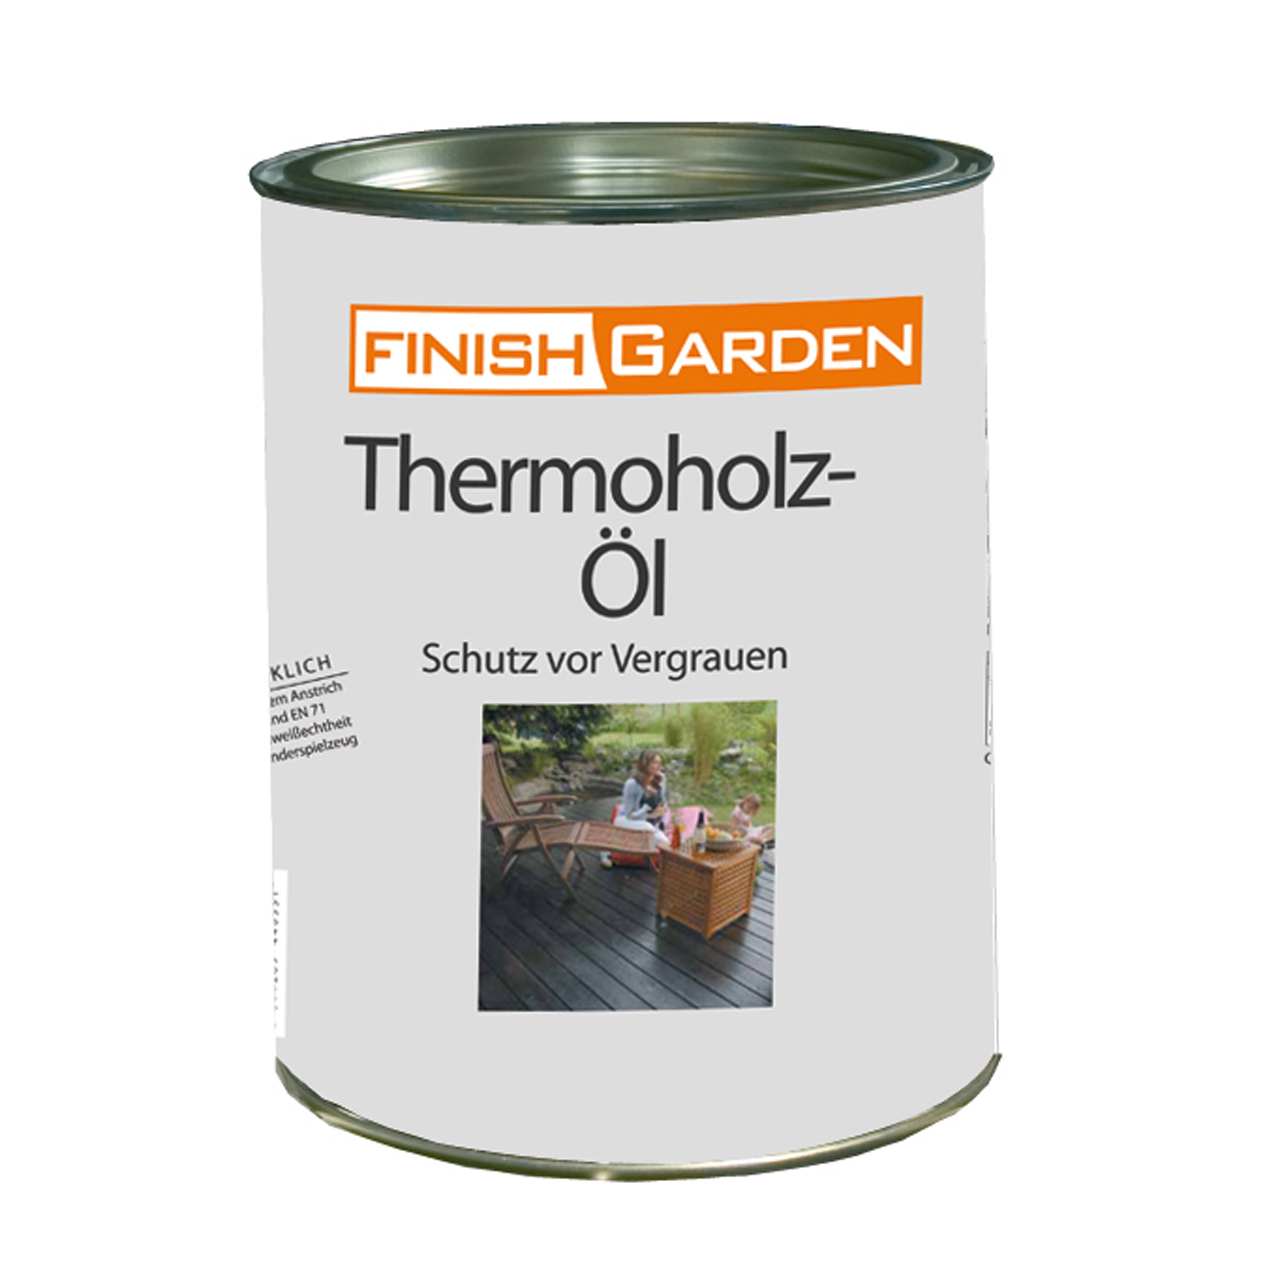 Finish Garden Thermoholz-Öl